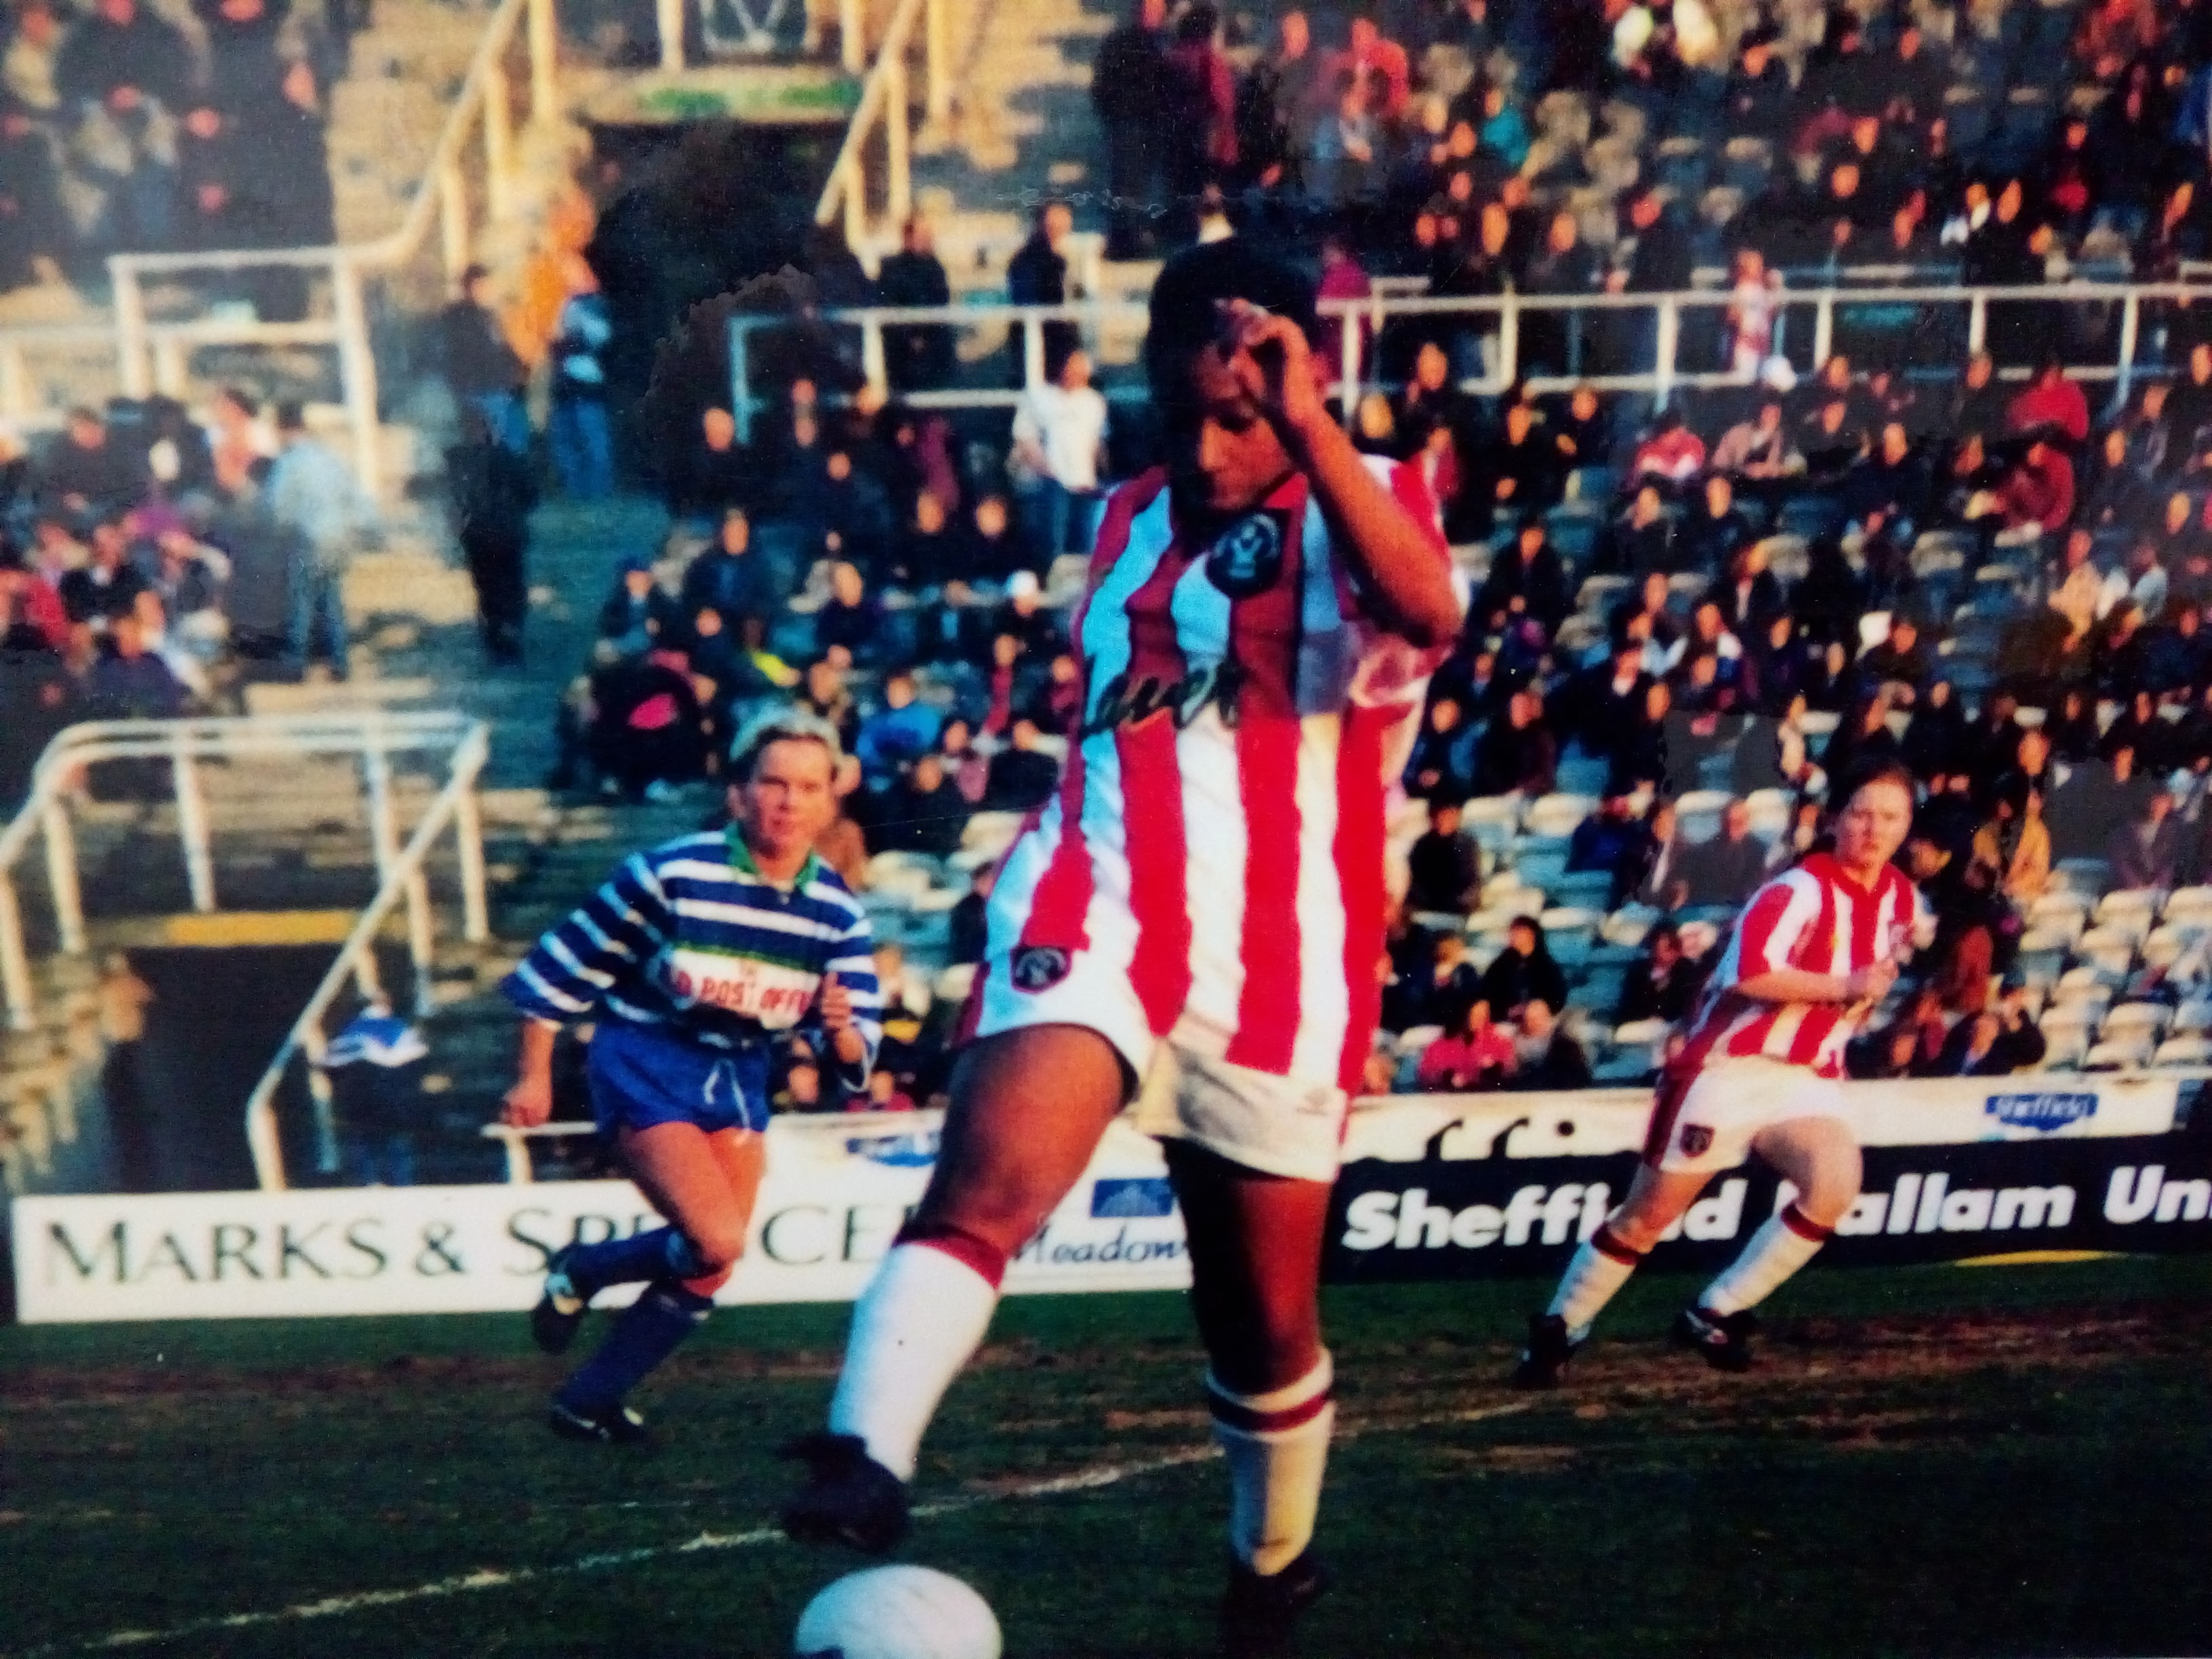 Pauline Braham playing for Sheffield Hallam United, 1990s - Pauline Braham playing for Sheffield Hallam United, 1990s.